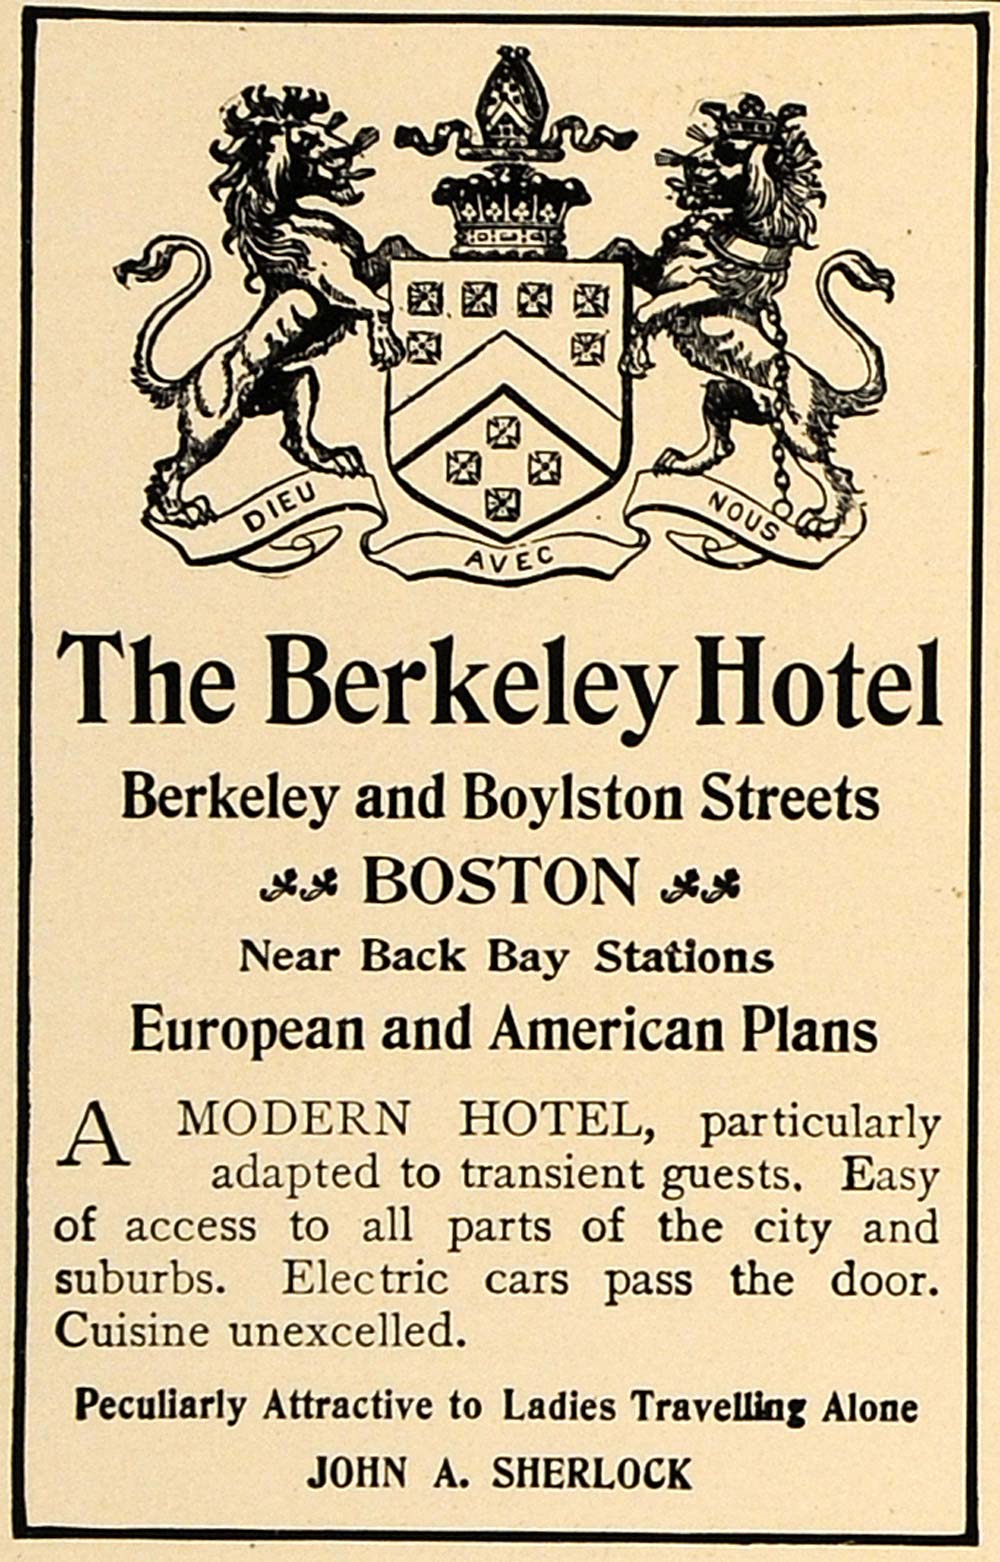 1905 Ad Berkeley Hotel Boston Boylston John A. Sherlock - ORIGINAL CL7